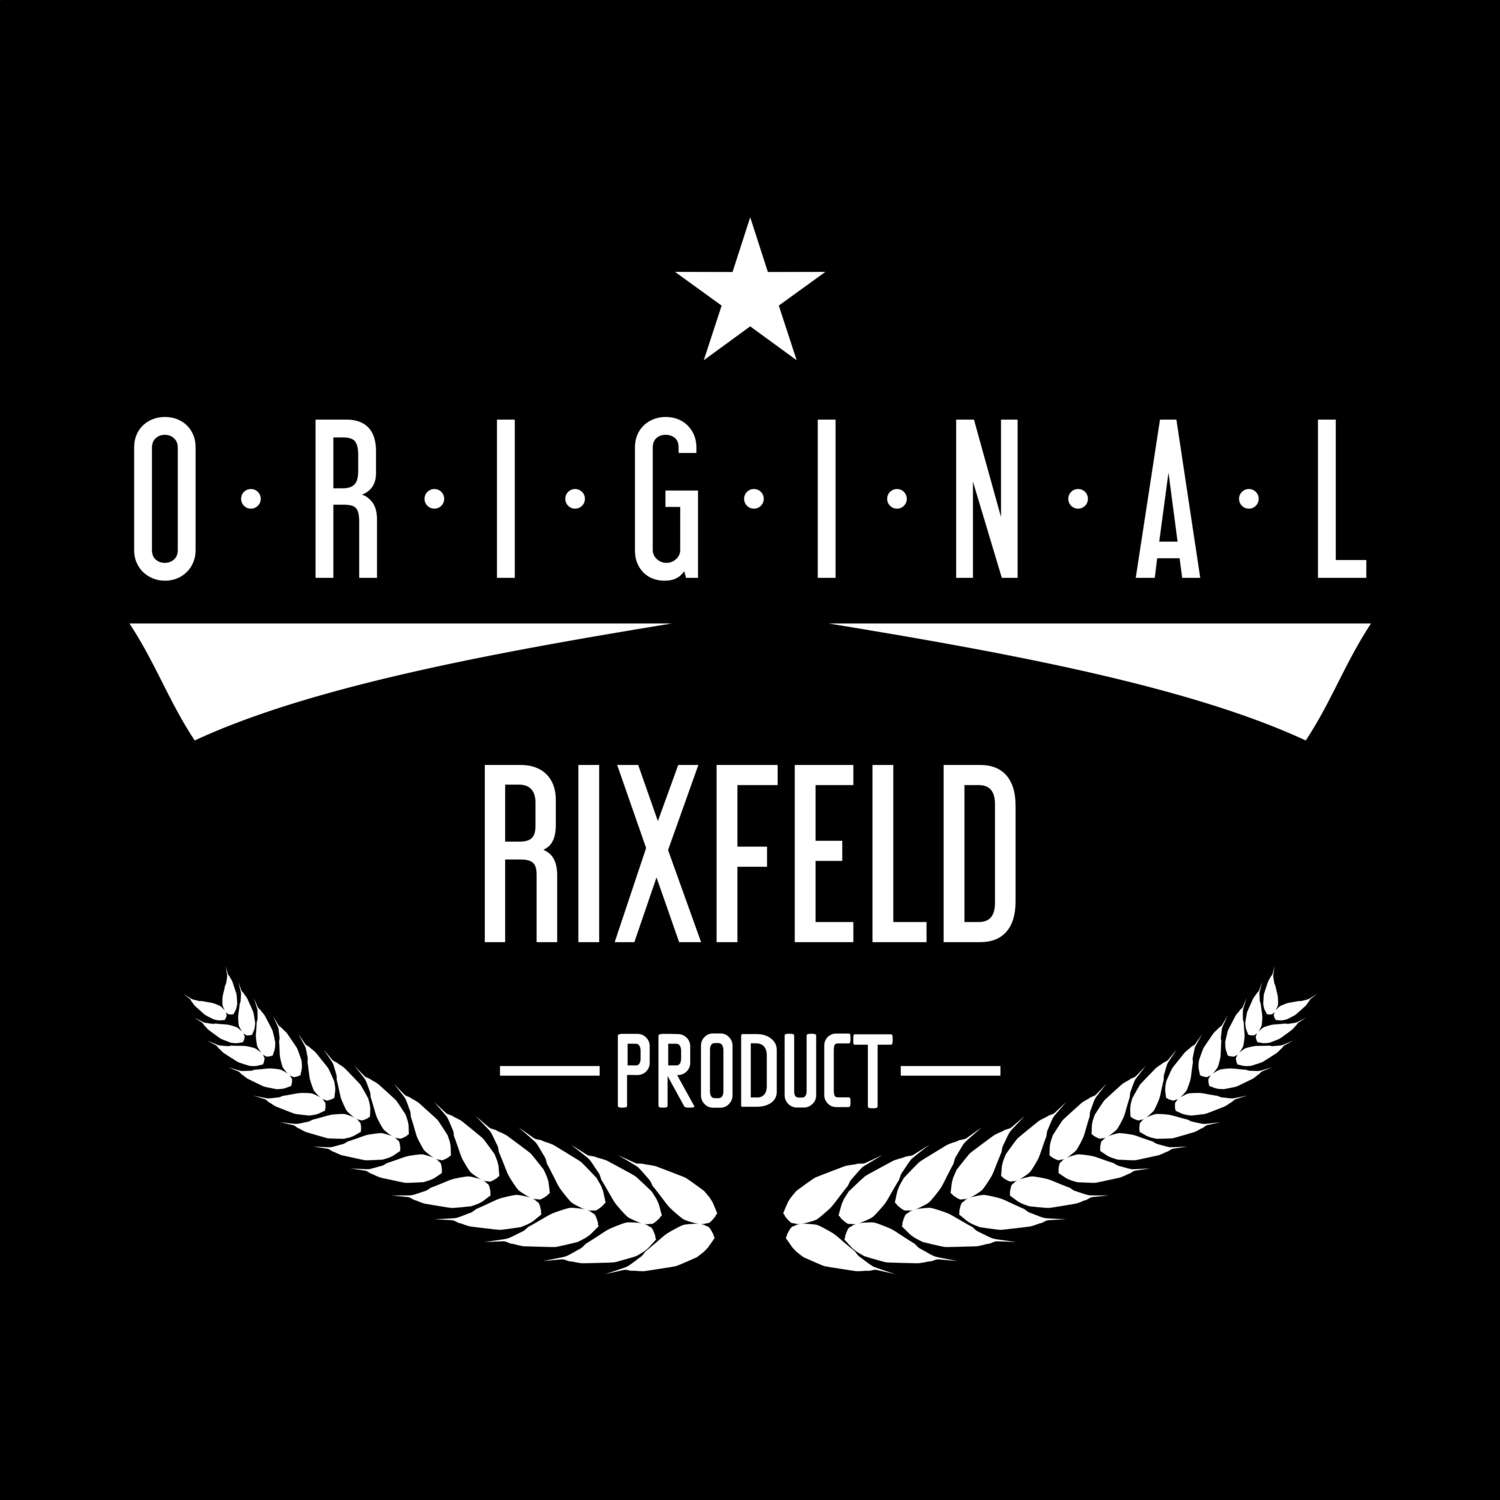 Rixfeld T-Shirt »Original Product«